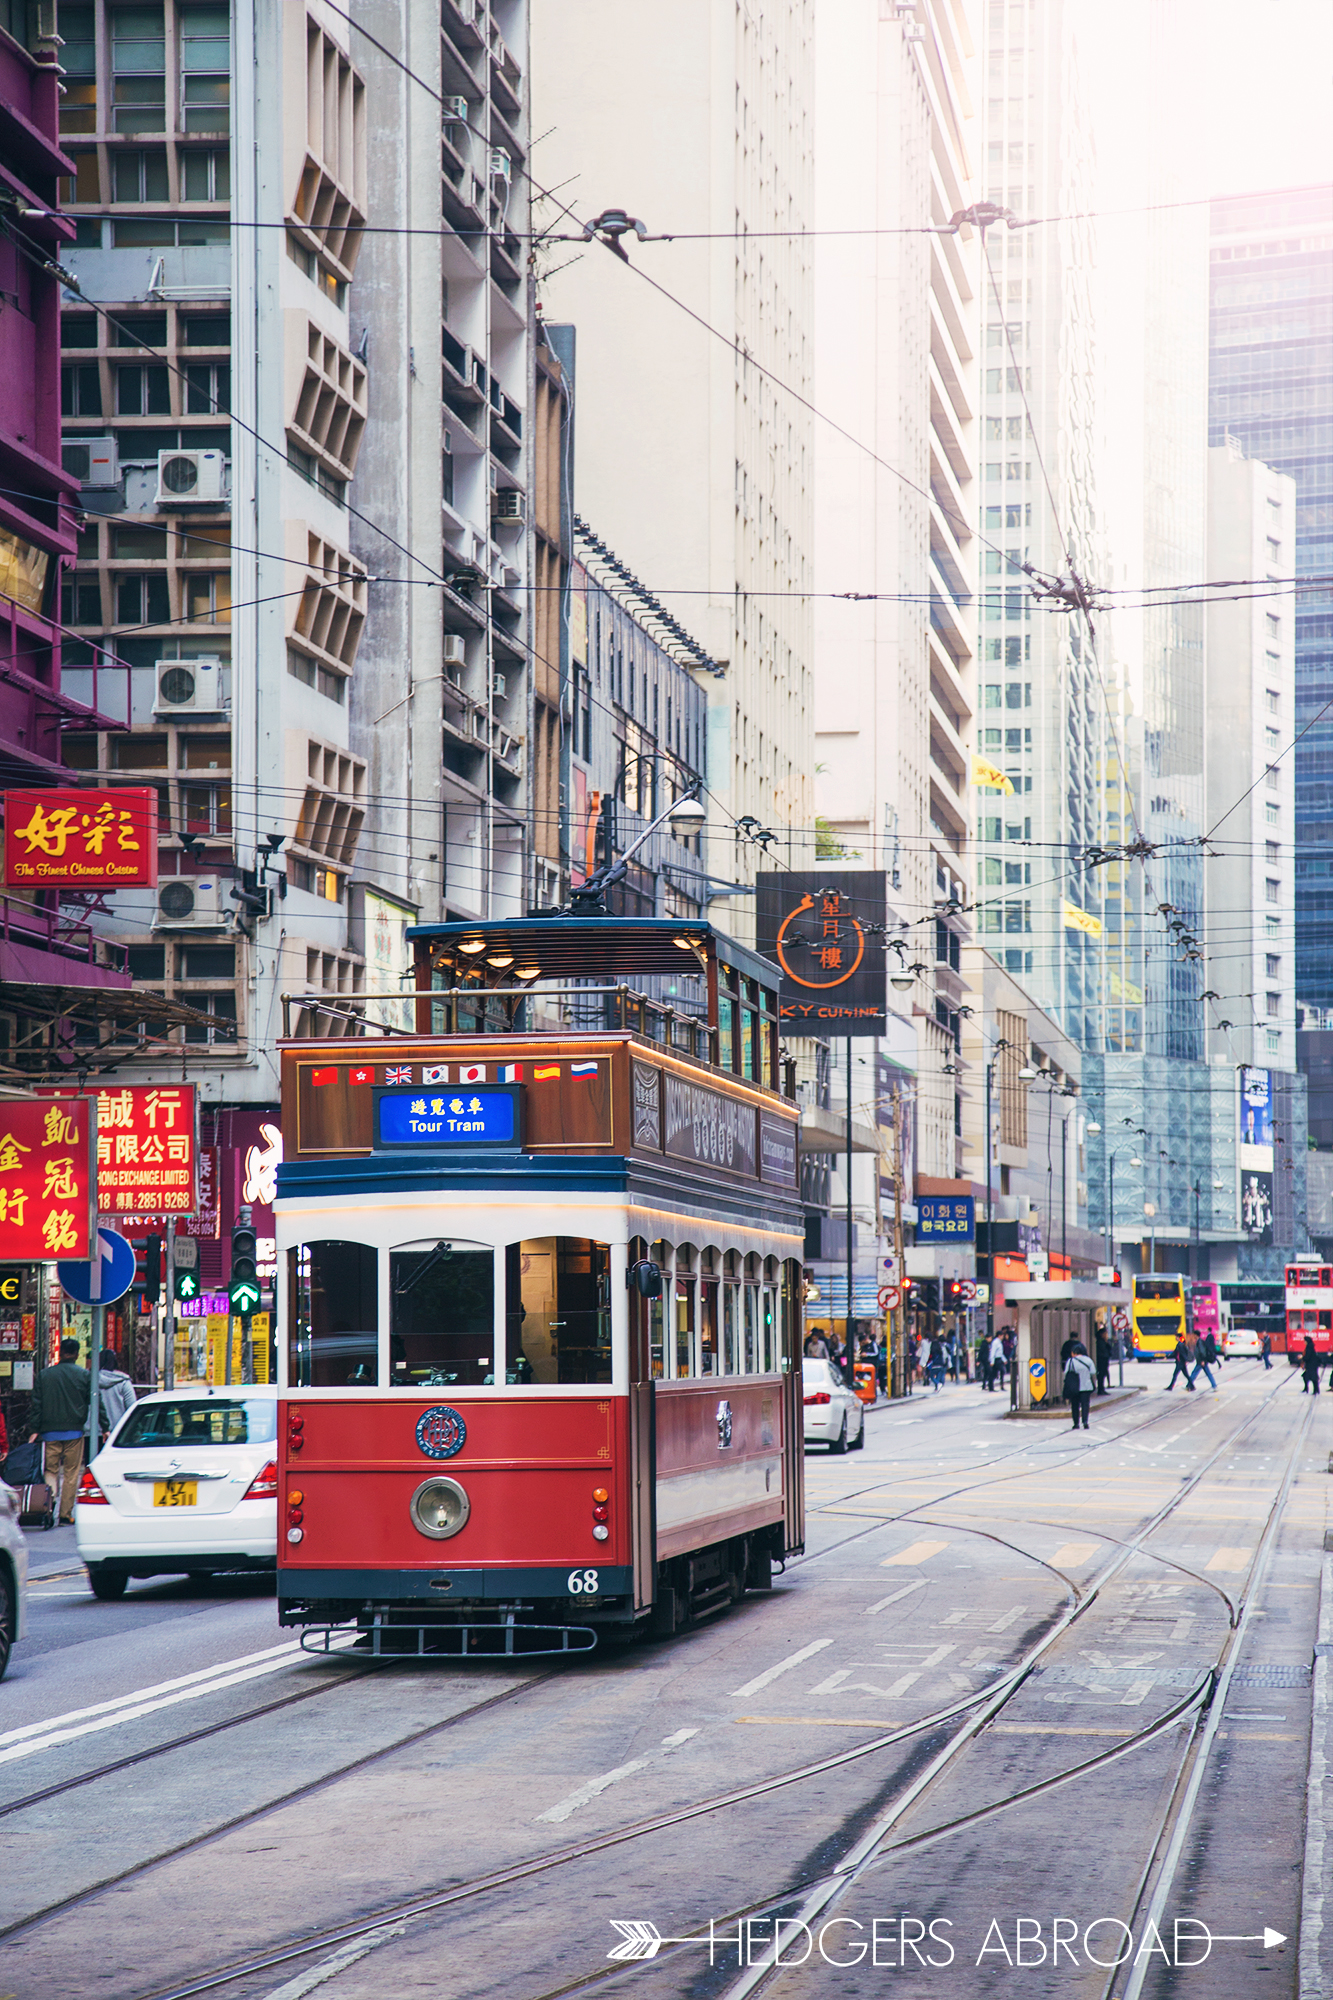 Hong Kong Street Cars - Hedgers Abroad